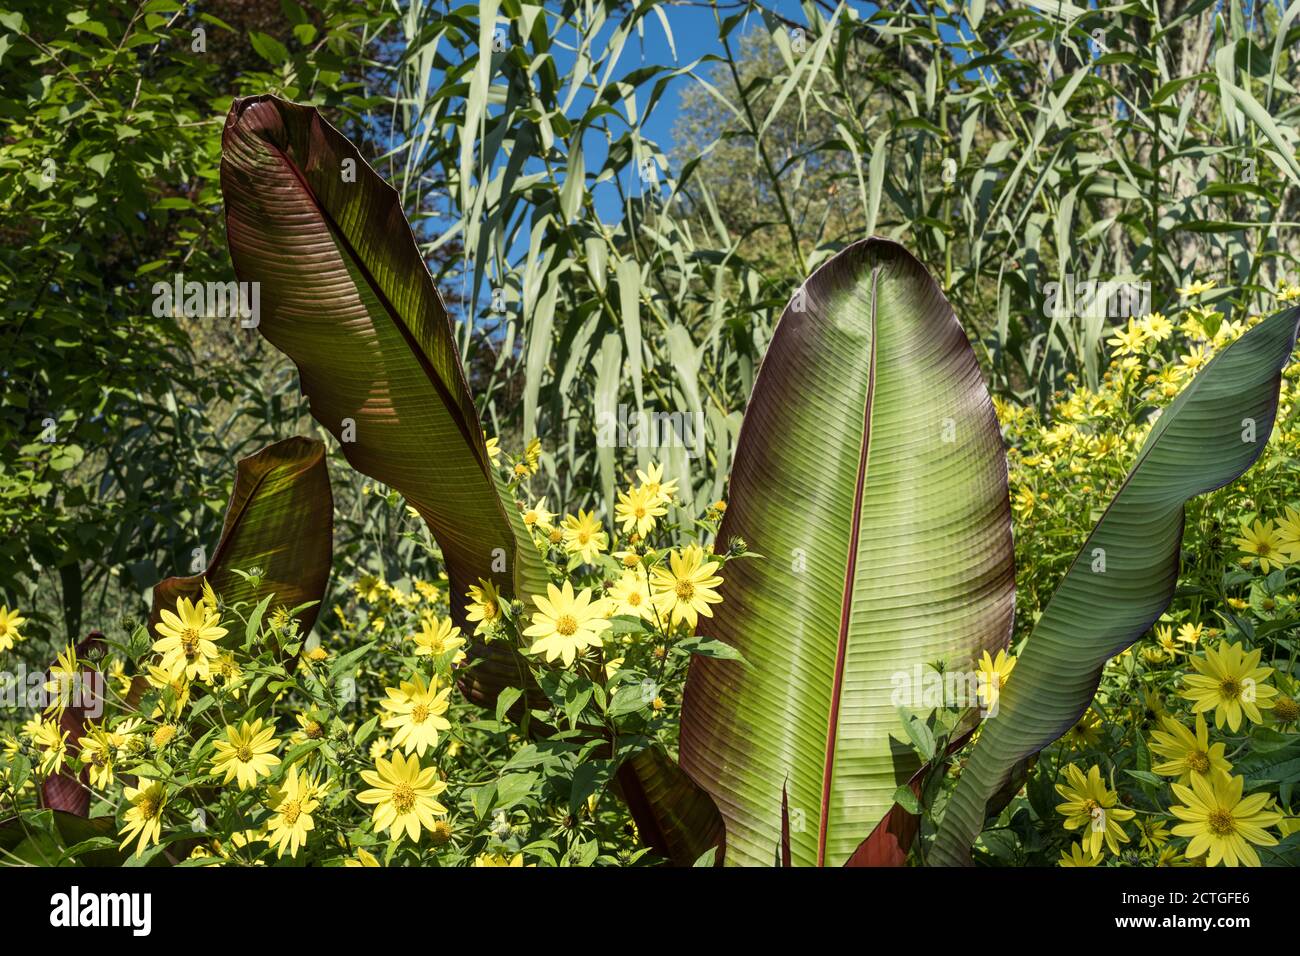 Ethiopian banana and rudbeckia in the border at Sir Harold Hiller Gardens near Romsey in Hampshire Stock Photo